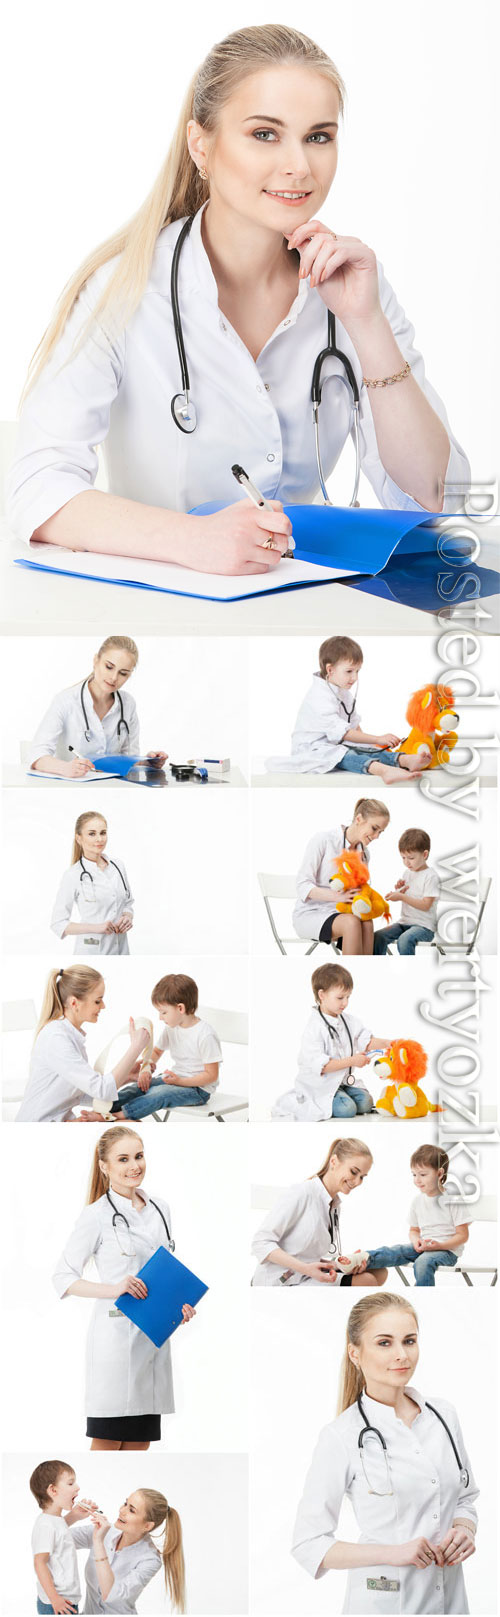 Woman pediatrician stock photo